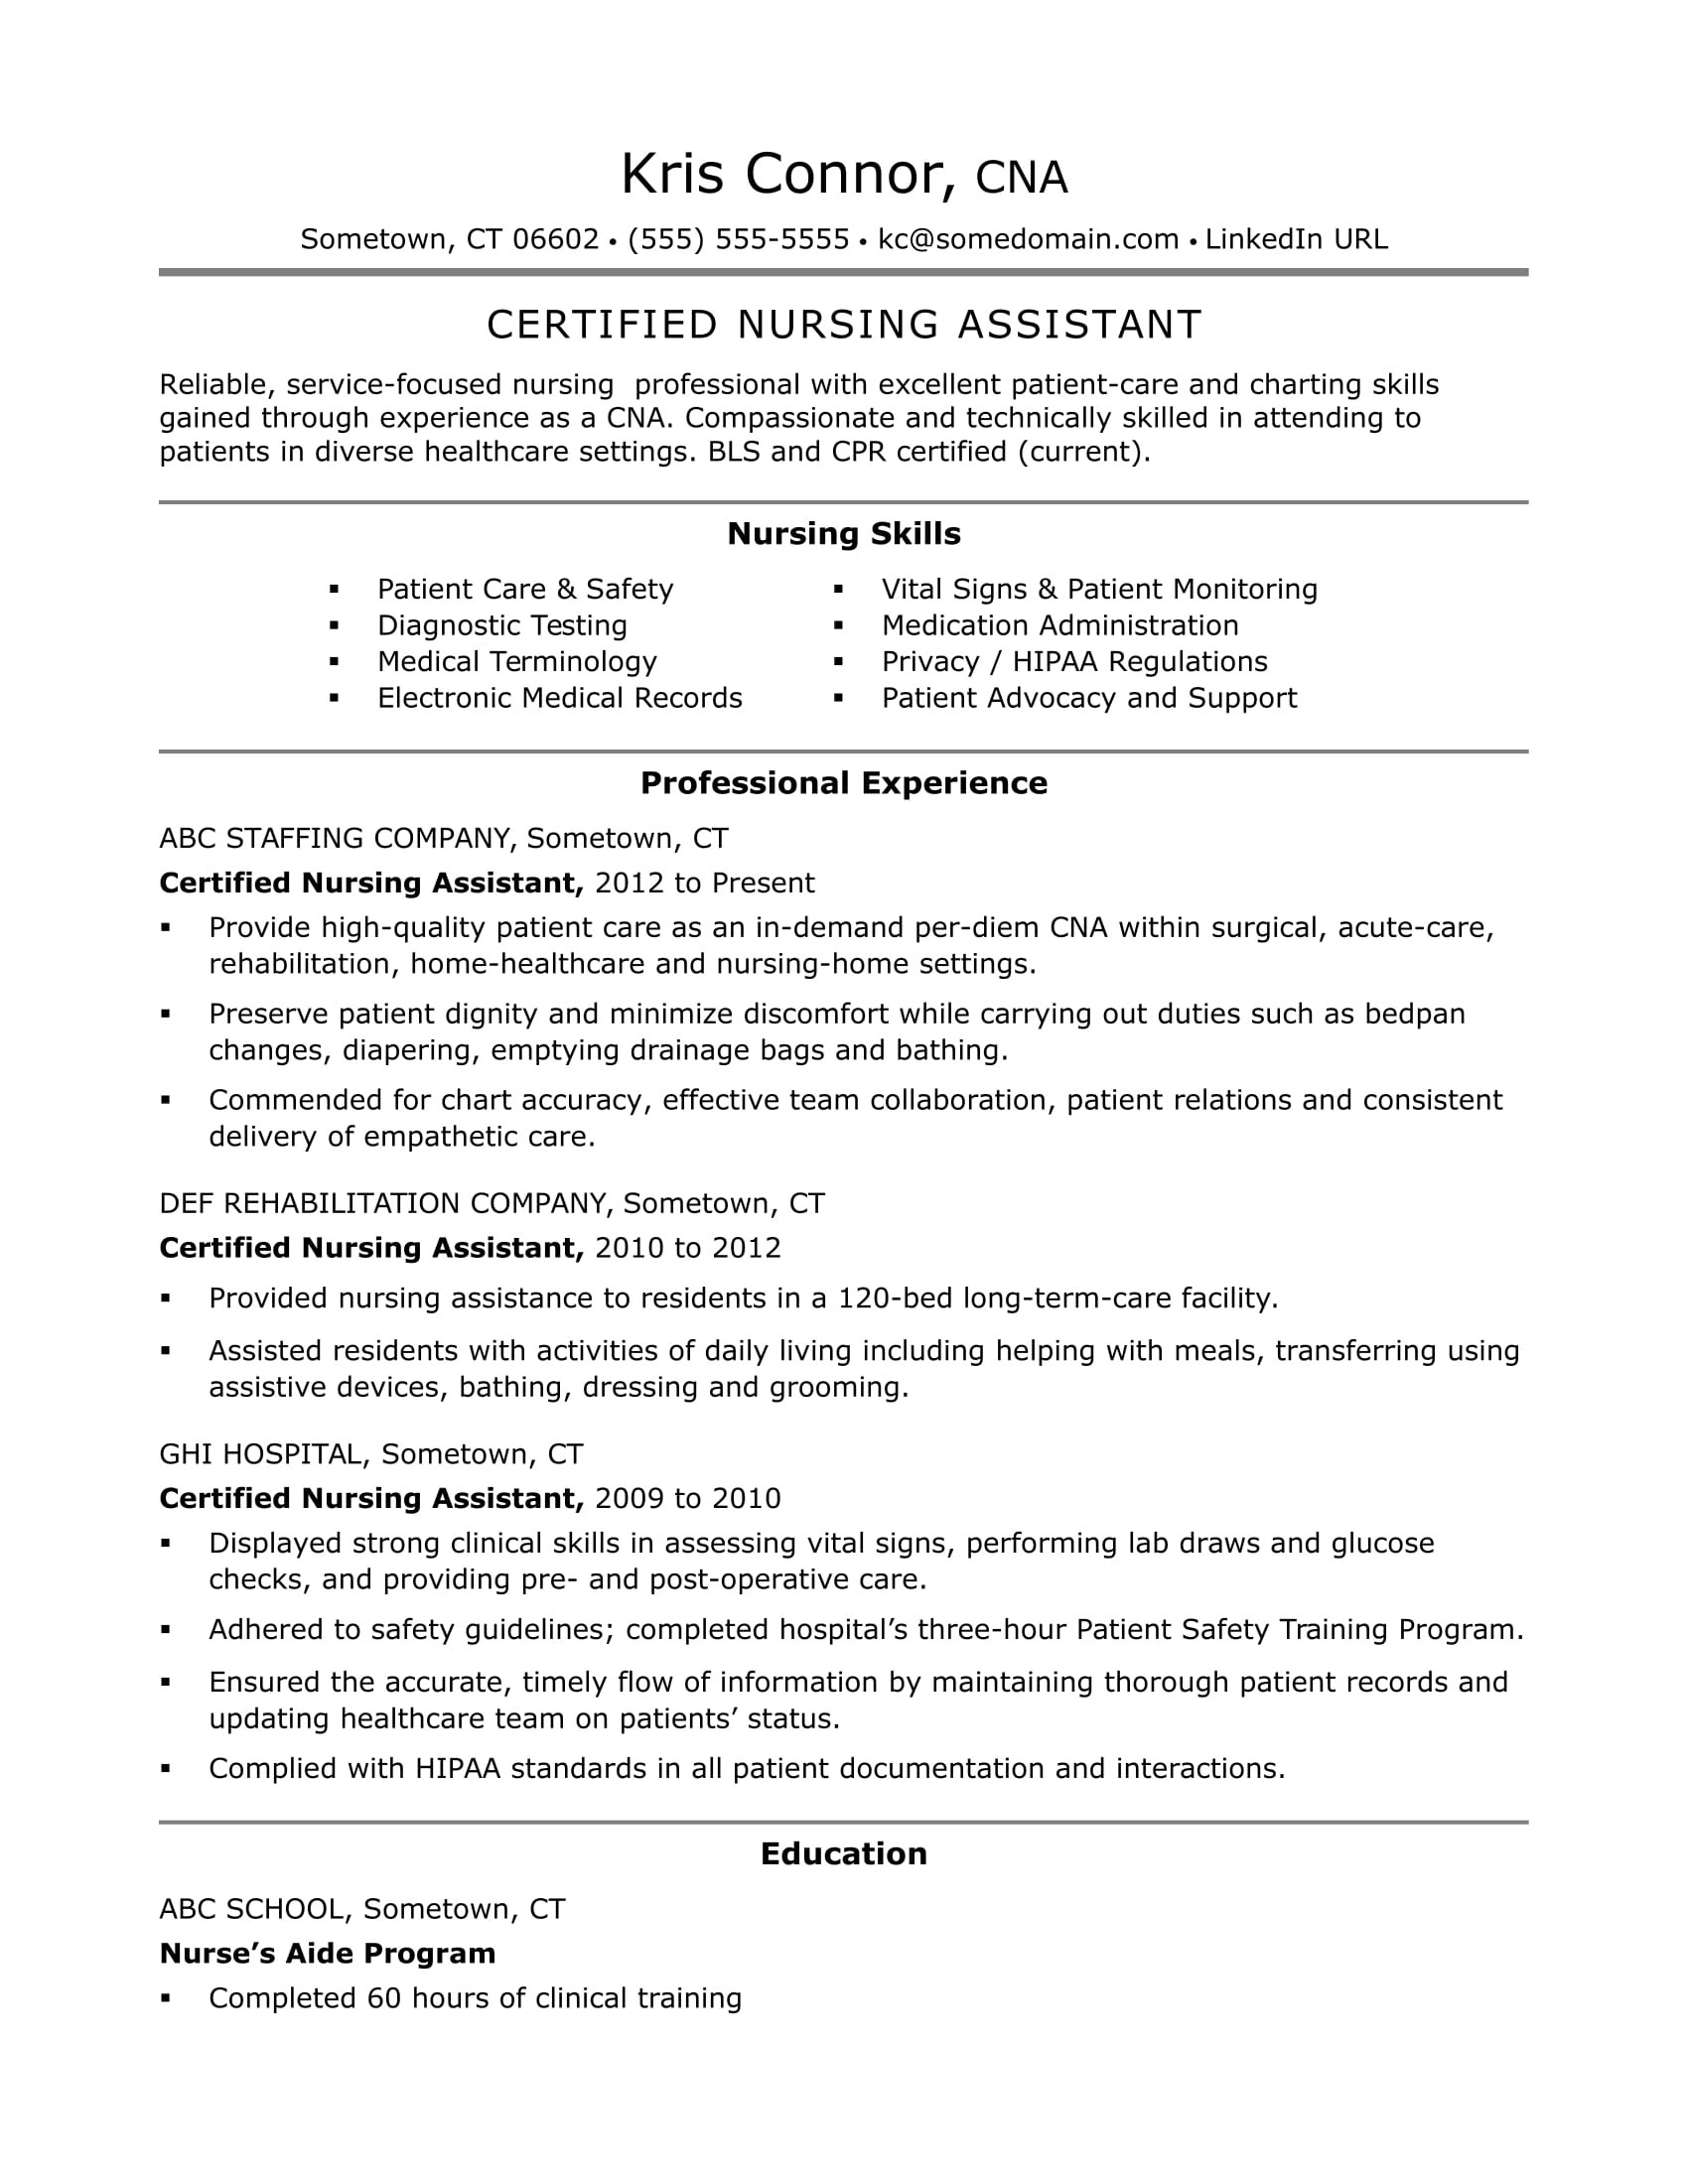 sample resume certified nursing assistant